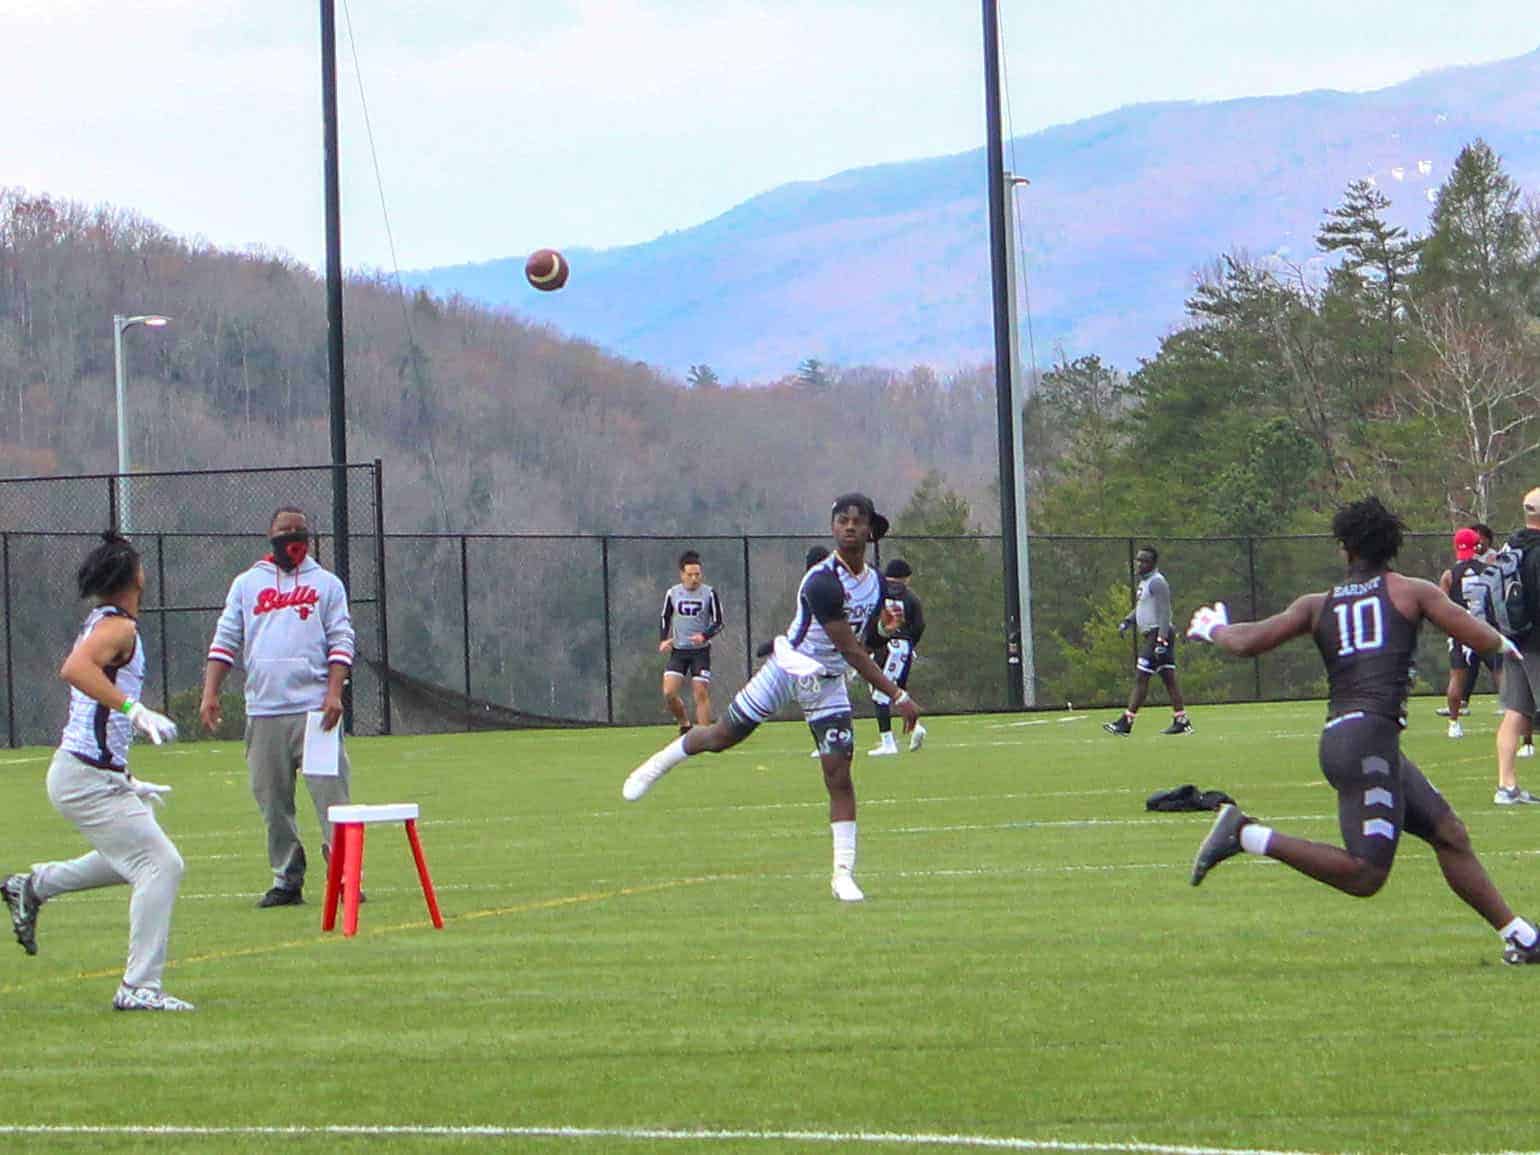 quarterback slinging a football to a receiver downfield